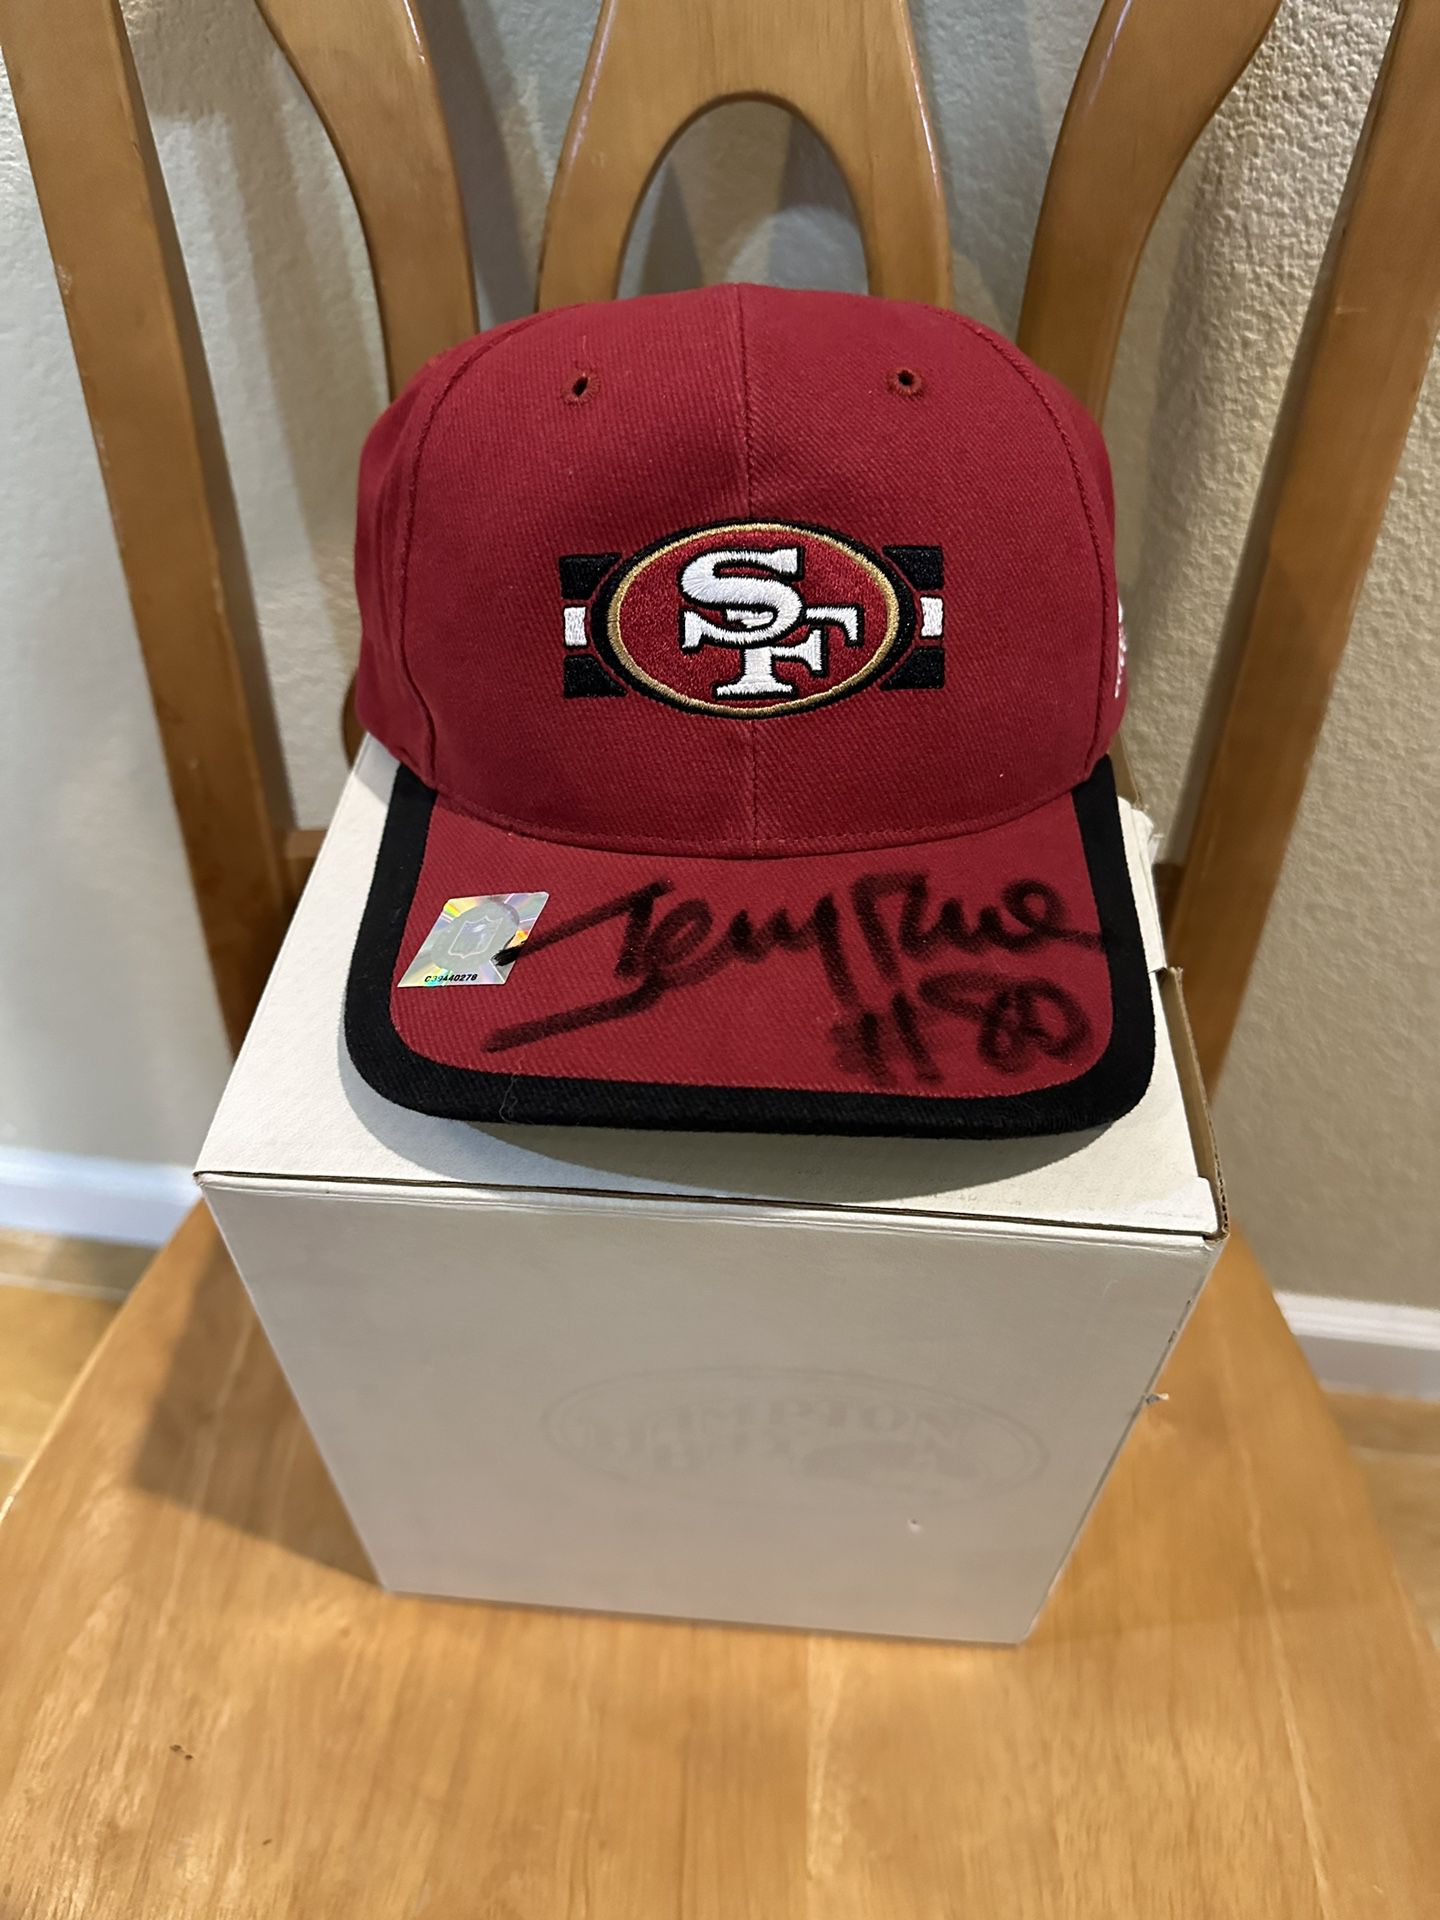 Jerry Rice Autographed Hat